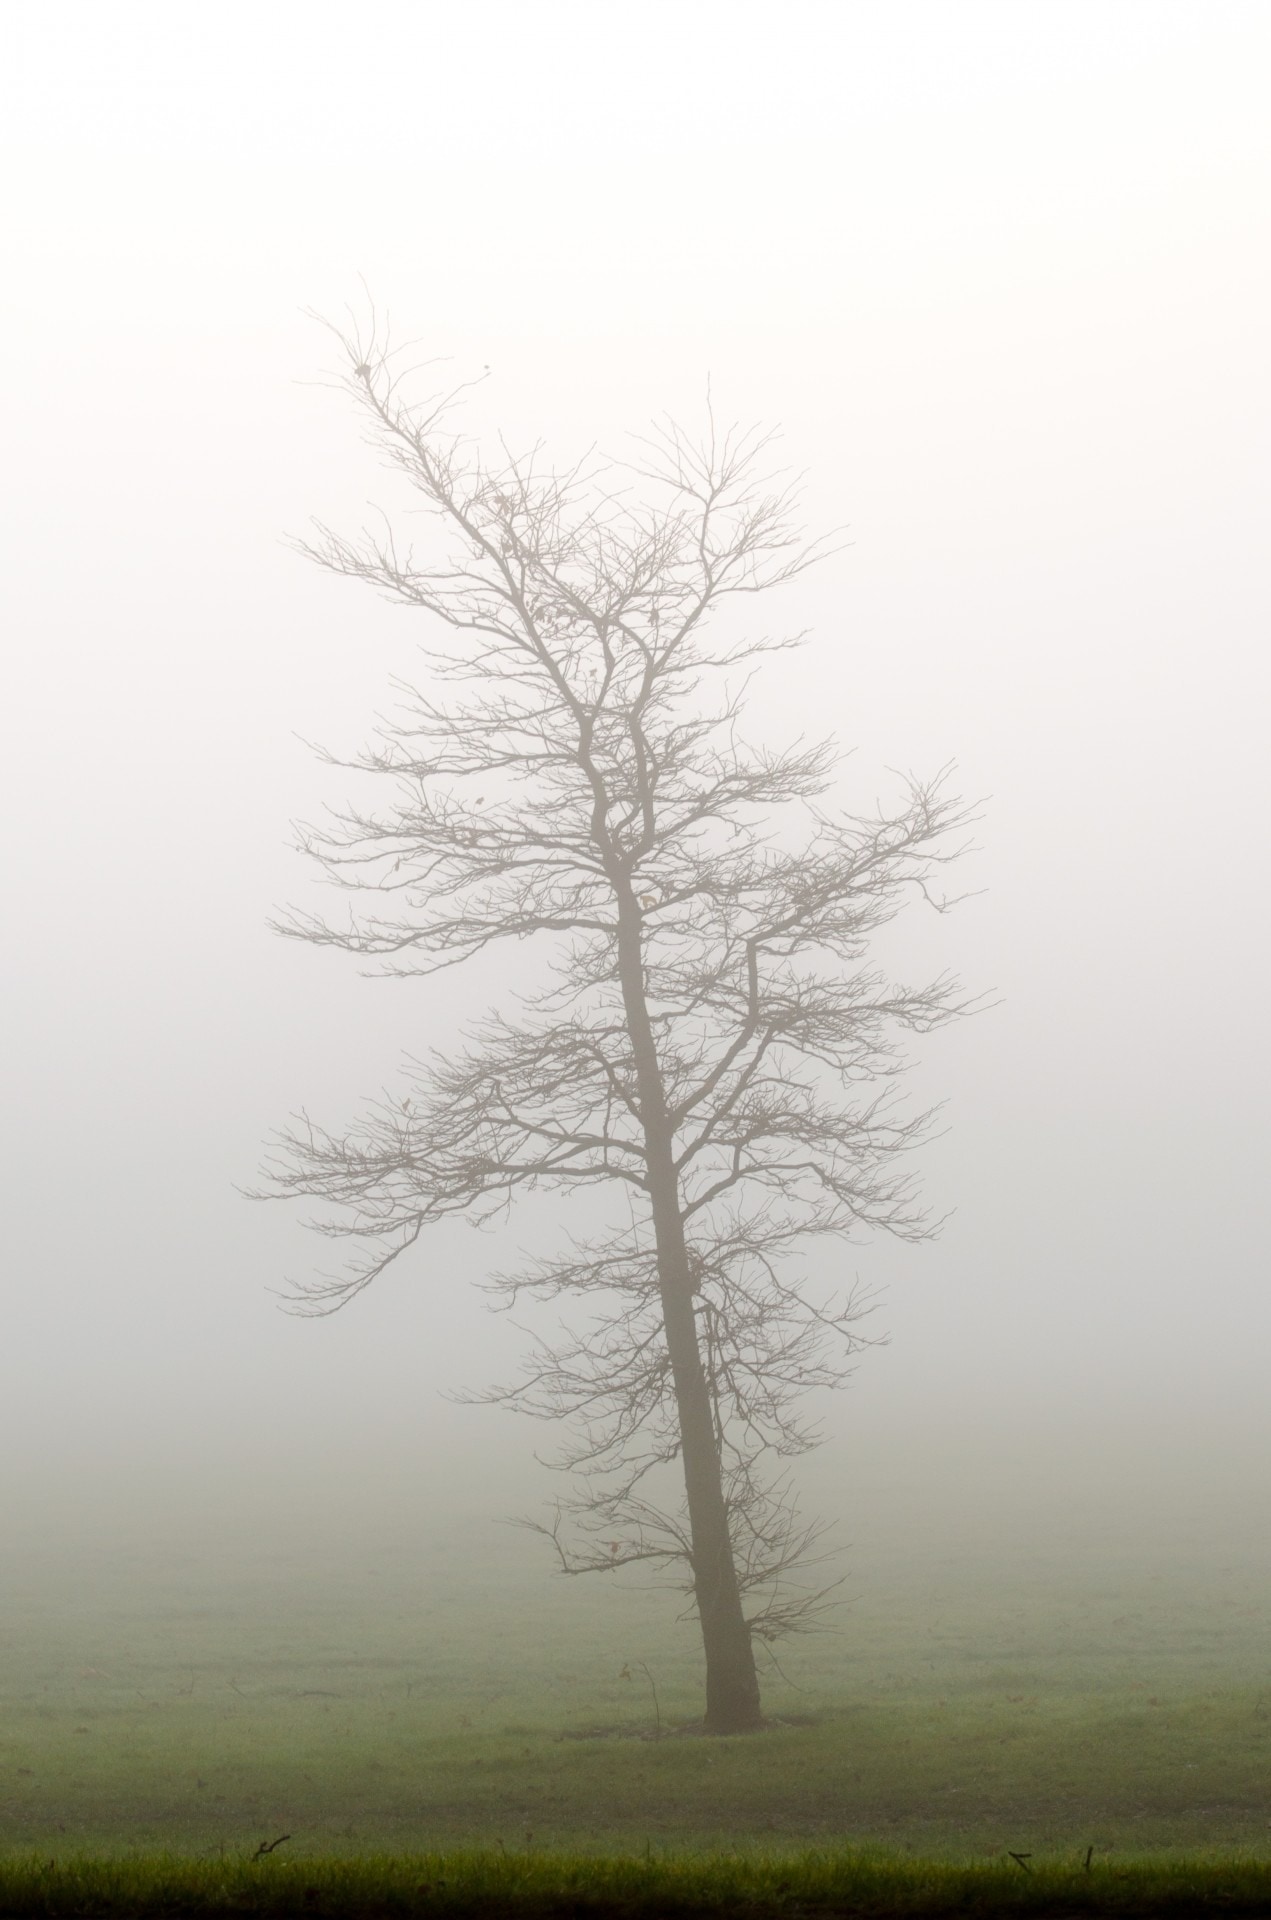 Trees, Fog, Tree, Weather, Seasons, fog, tranquility